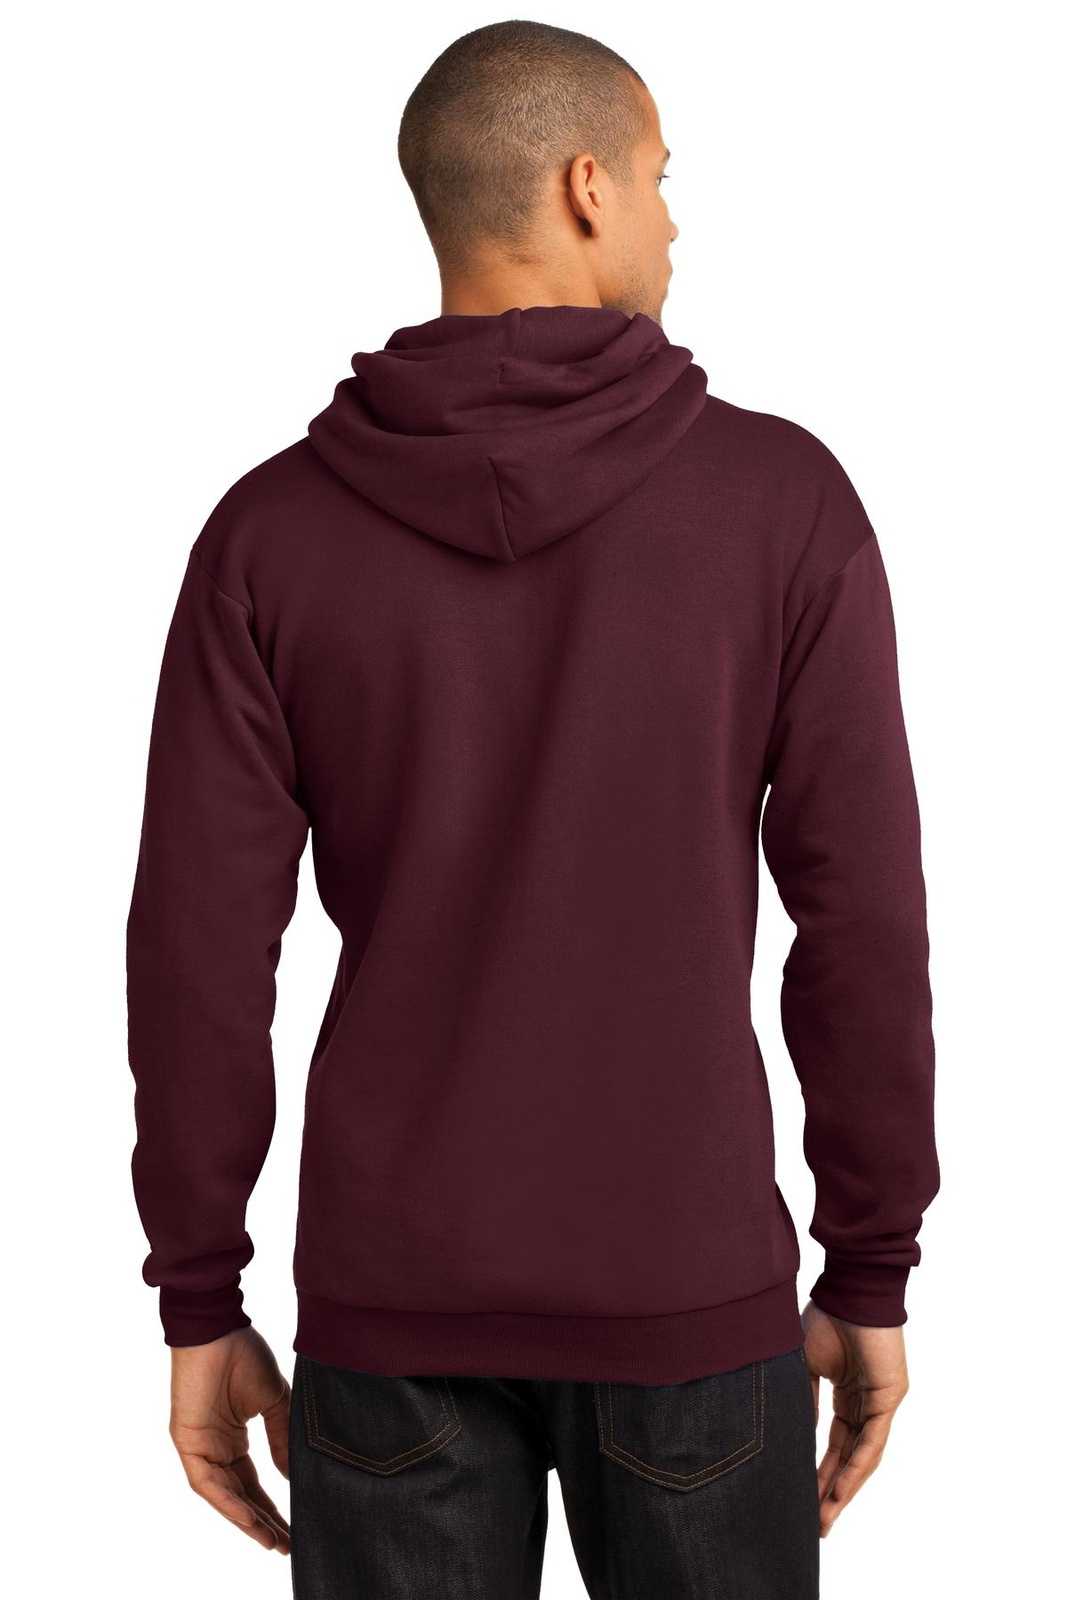 Port & Company PC78H Core Fleece Pullover Hooded Sweatshirt - Maroon - HIT a Double - 1